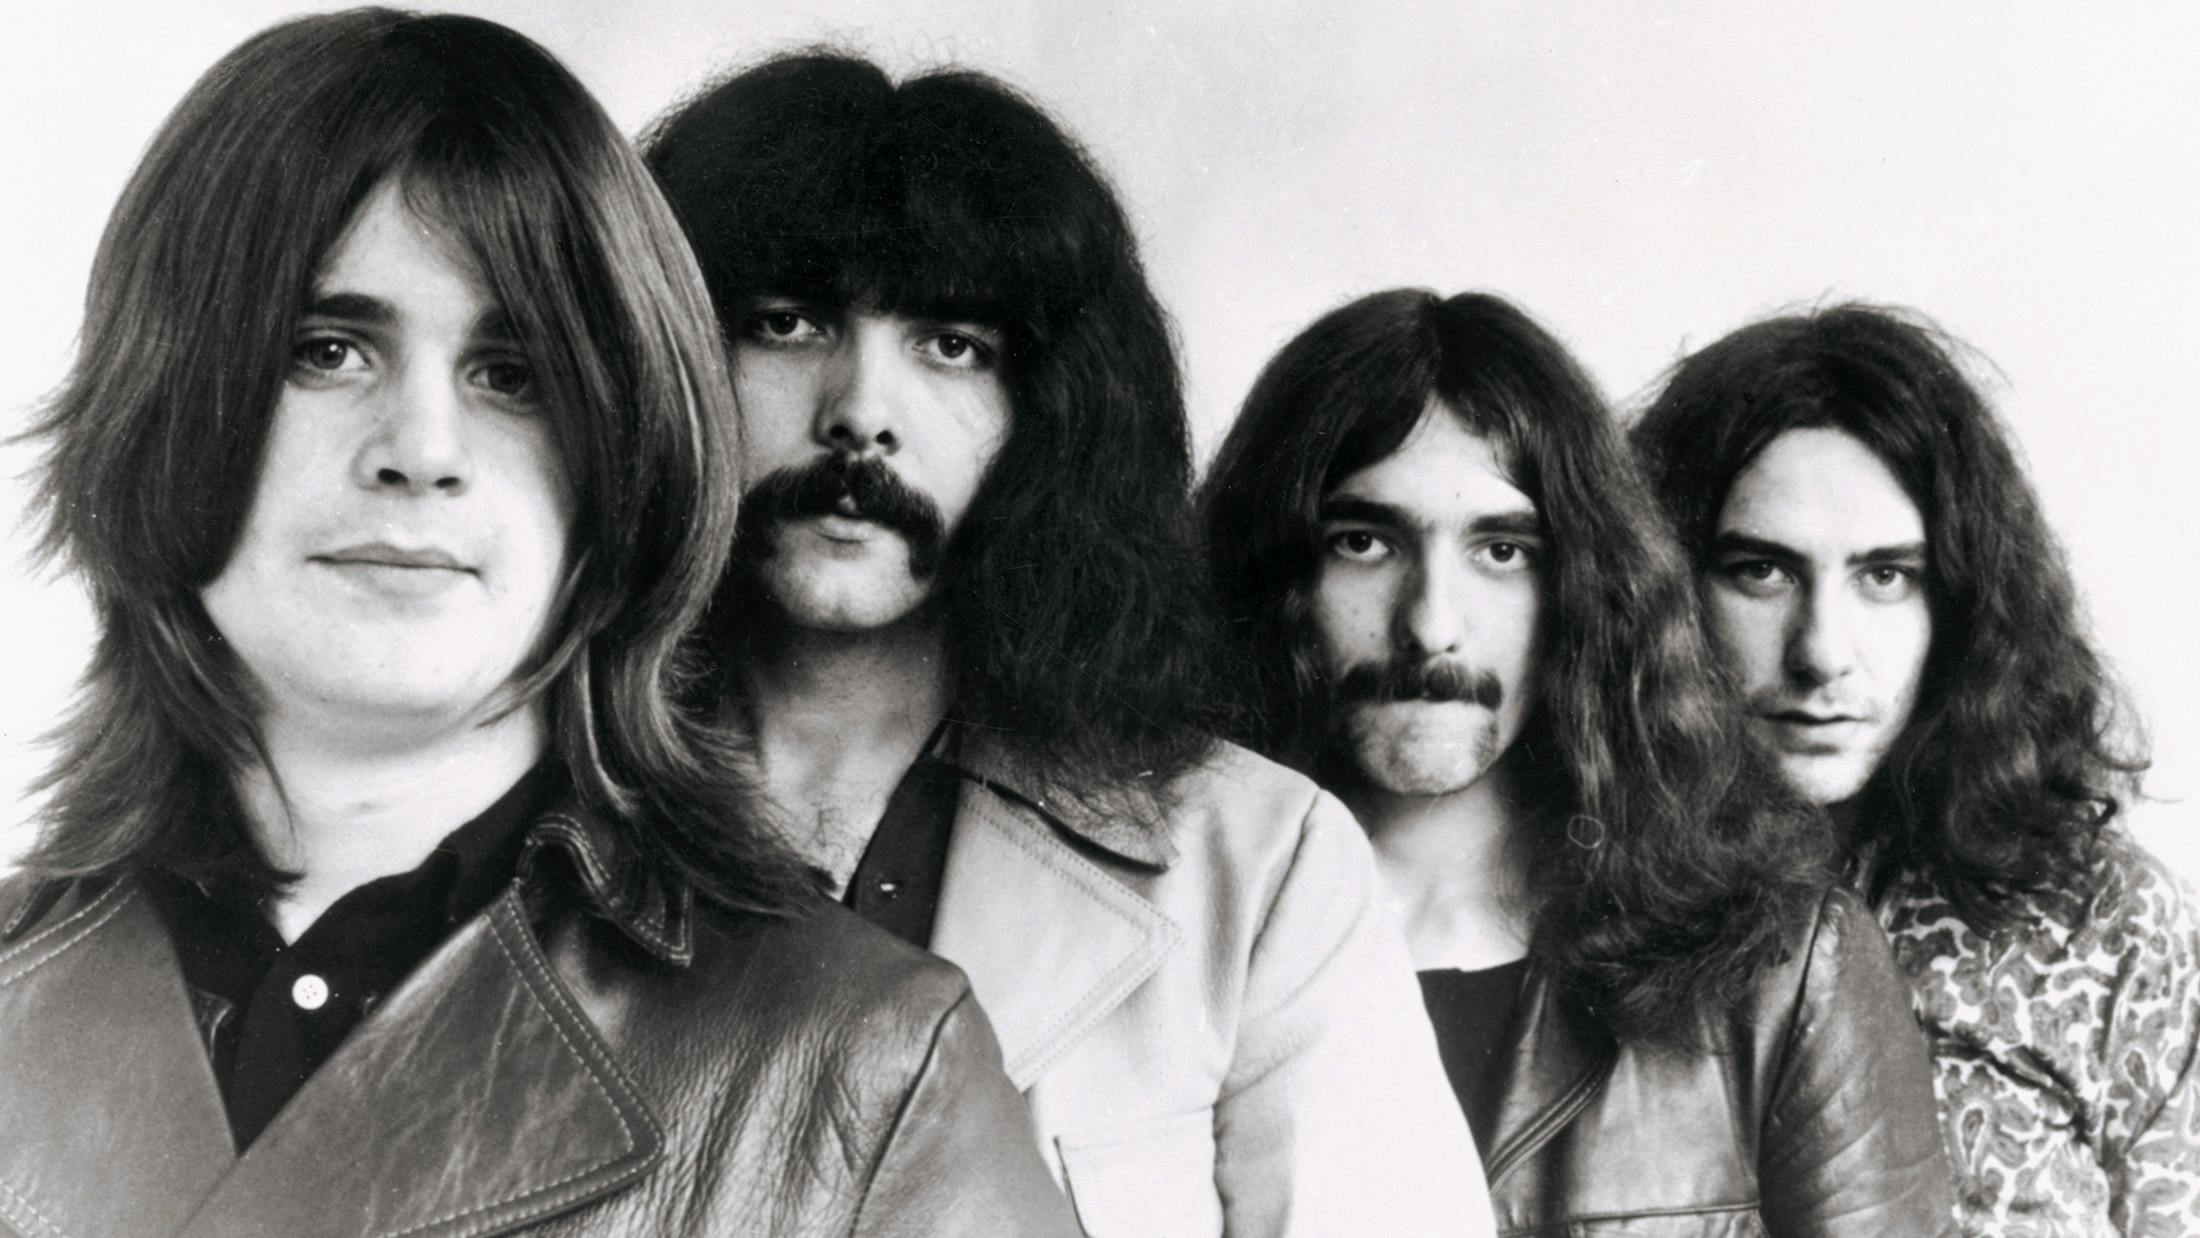 Black Sabbath are releasing a massive Technical Ecstasy box set